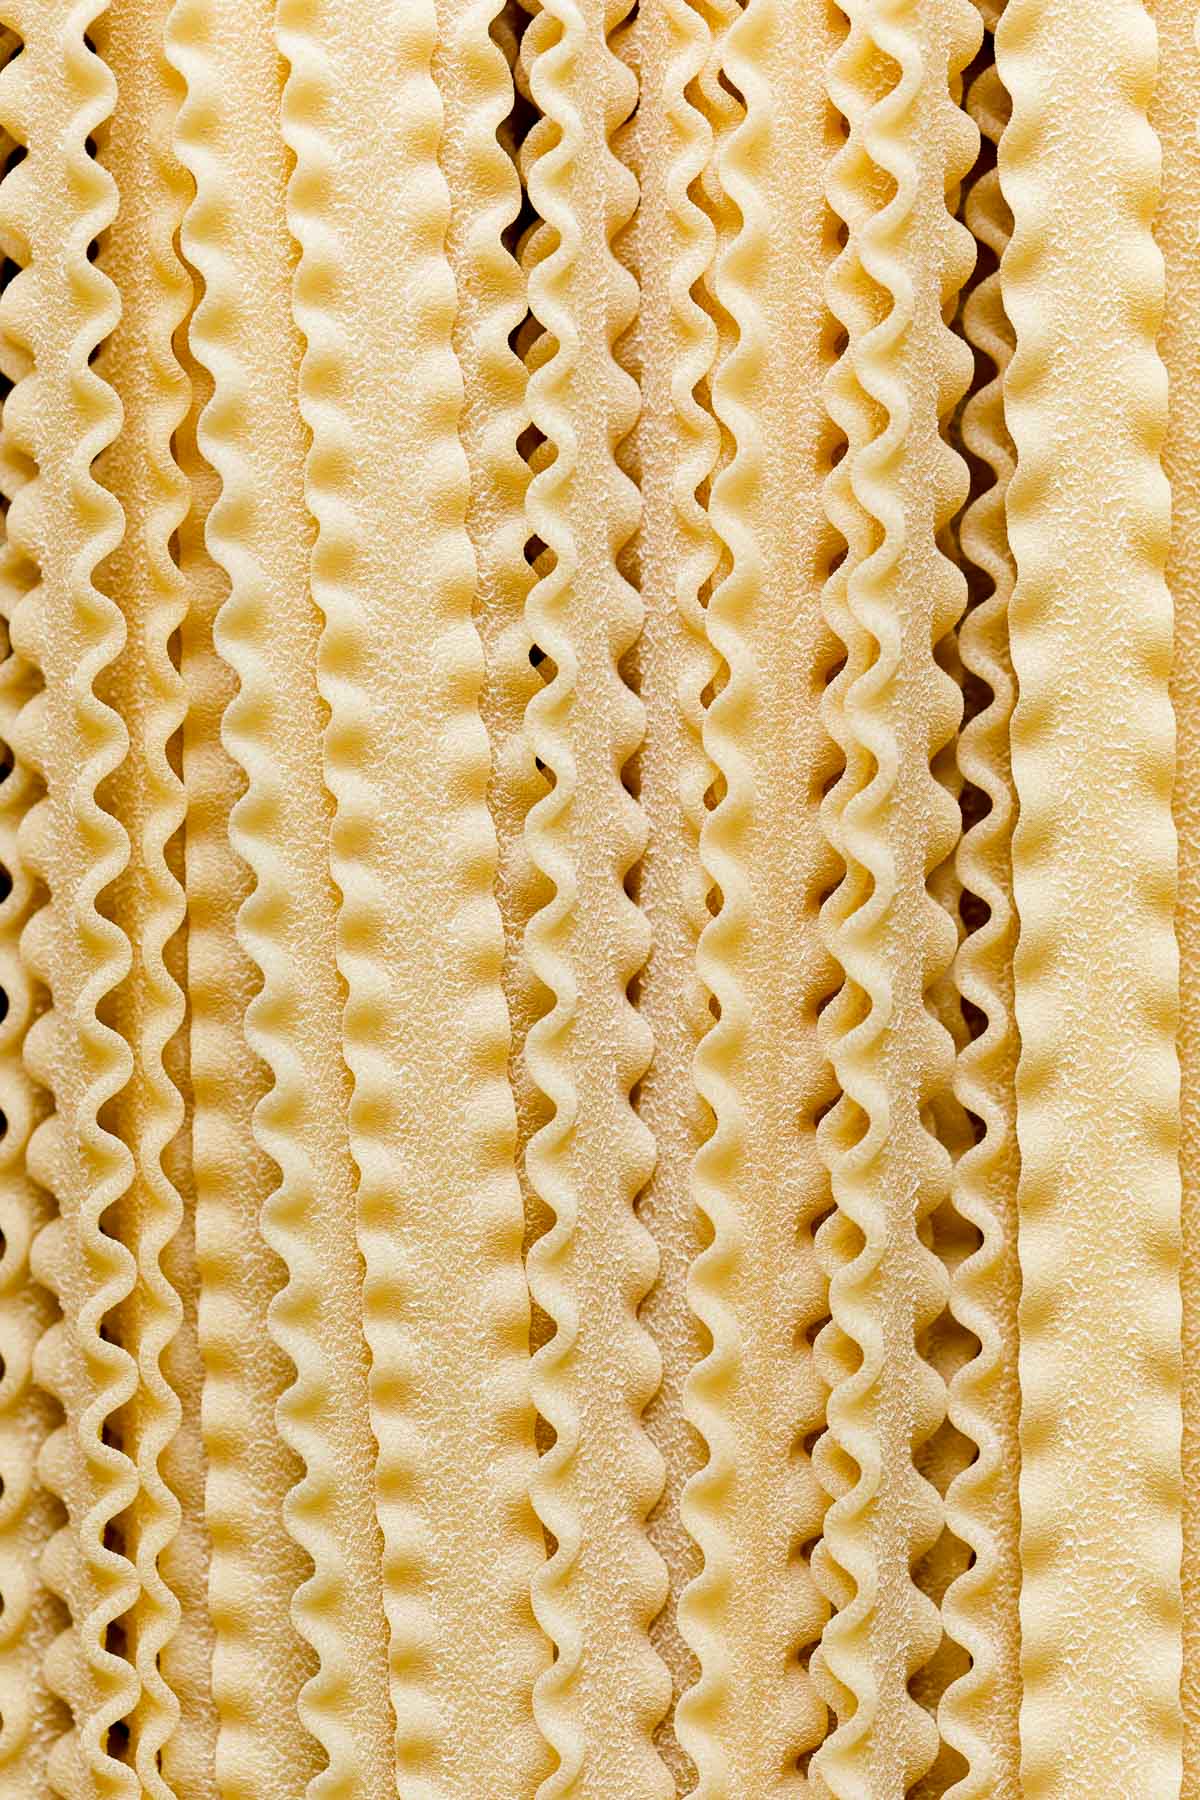 A close up shot of dried mafaldine pasta used to make mushroom ragu pasta.